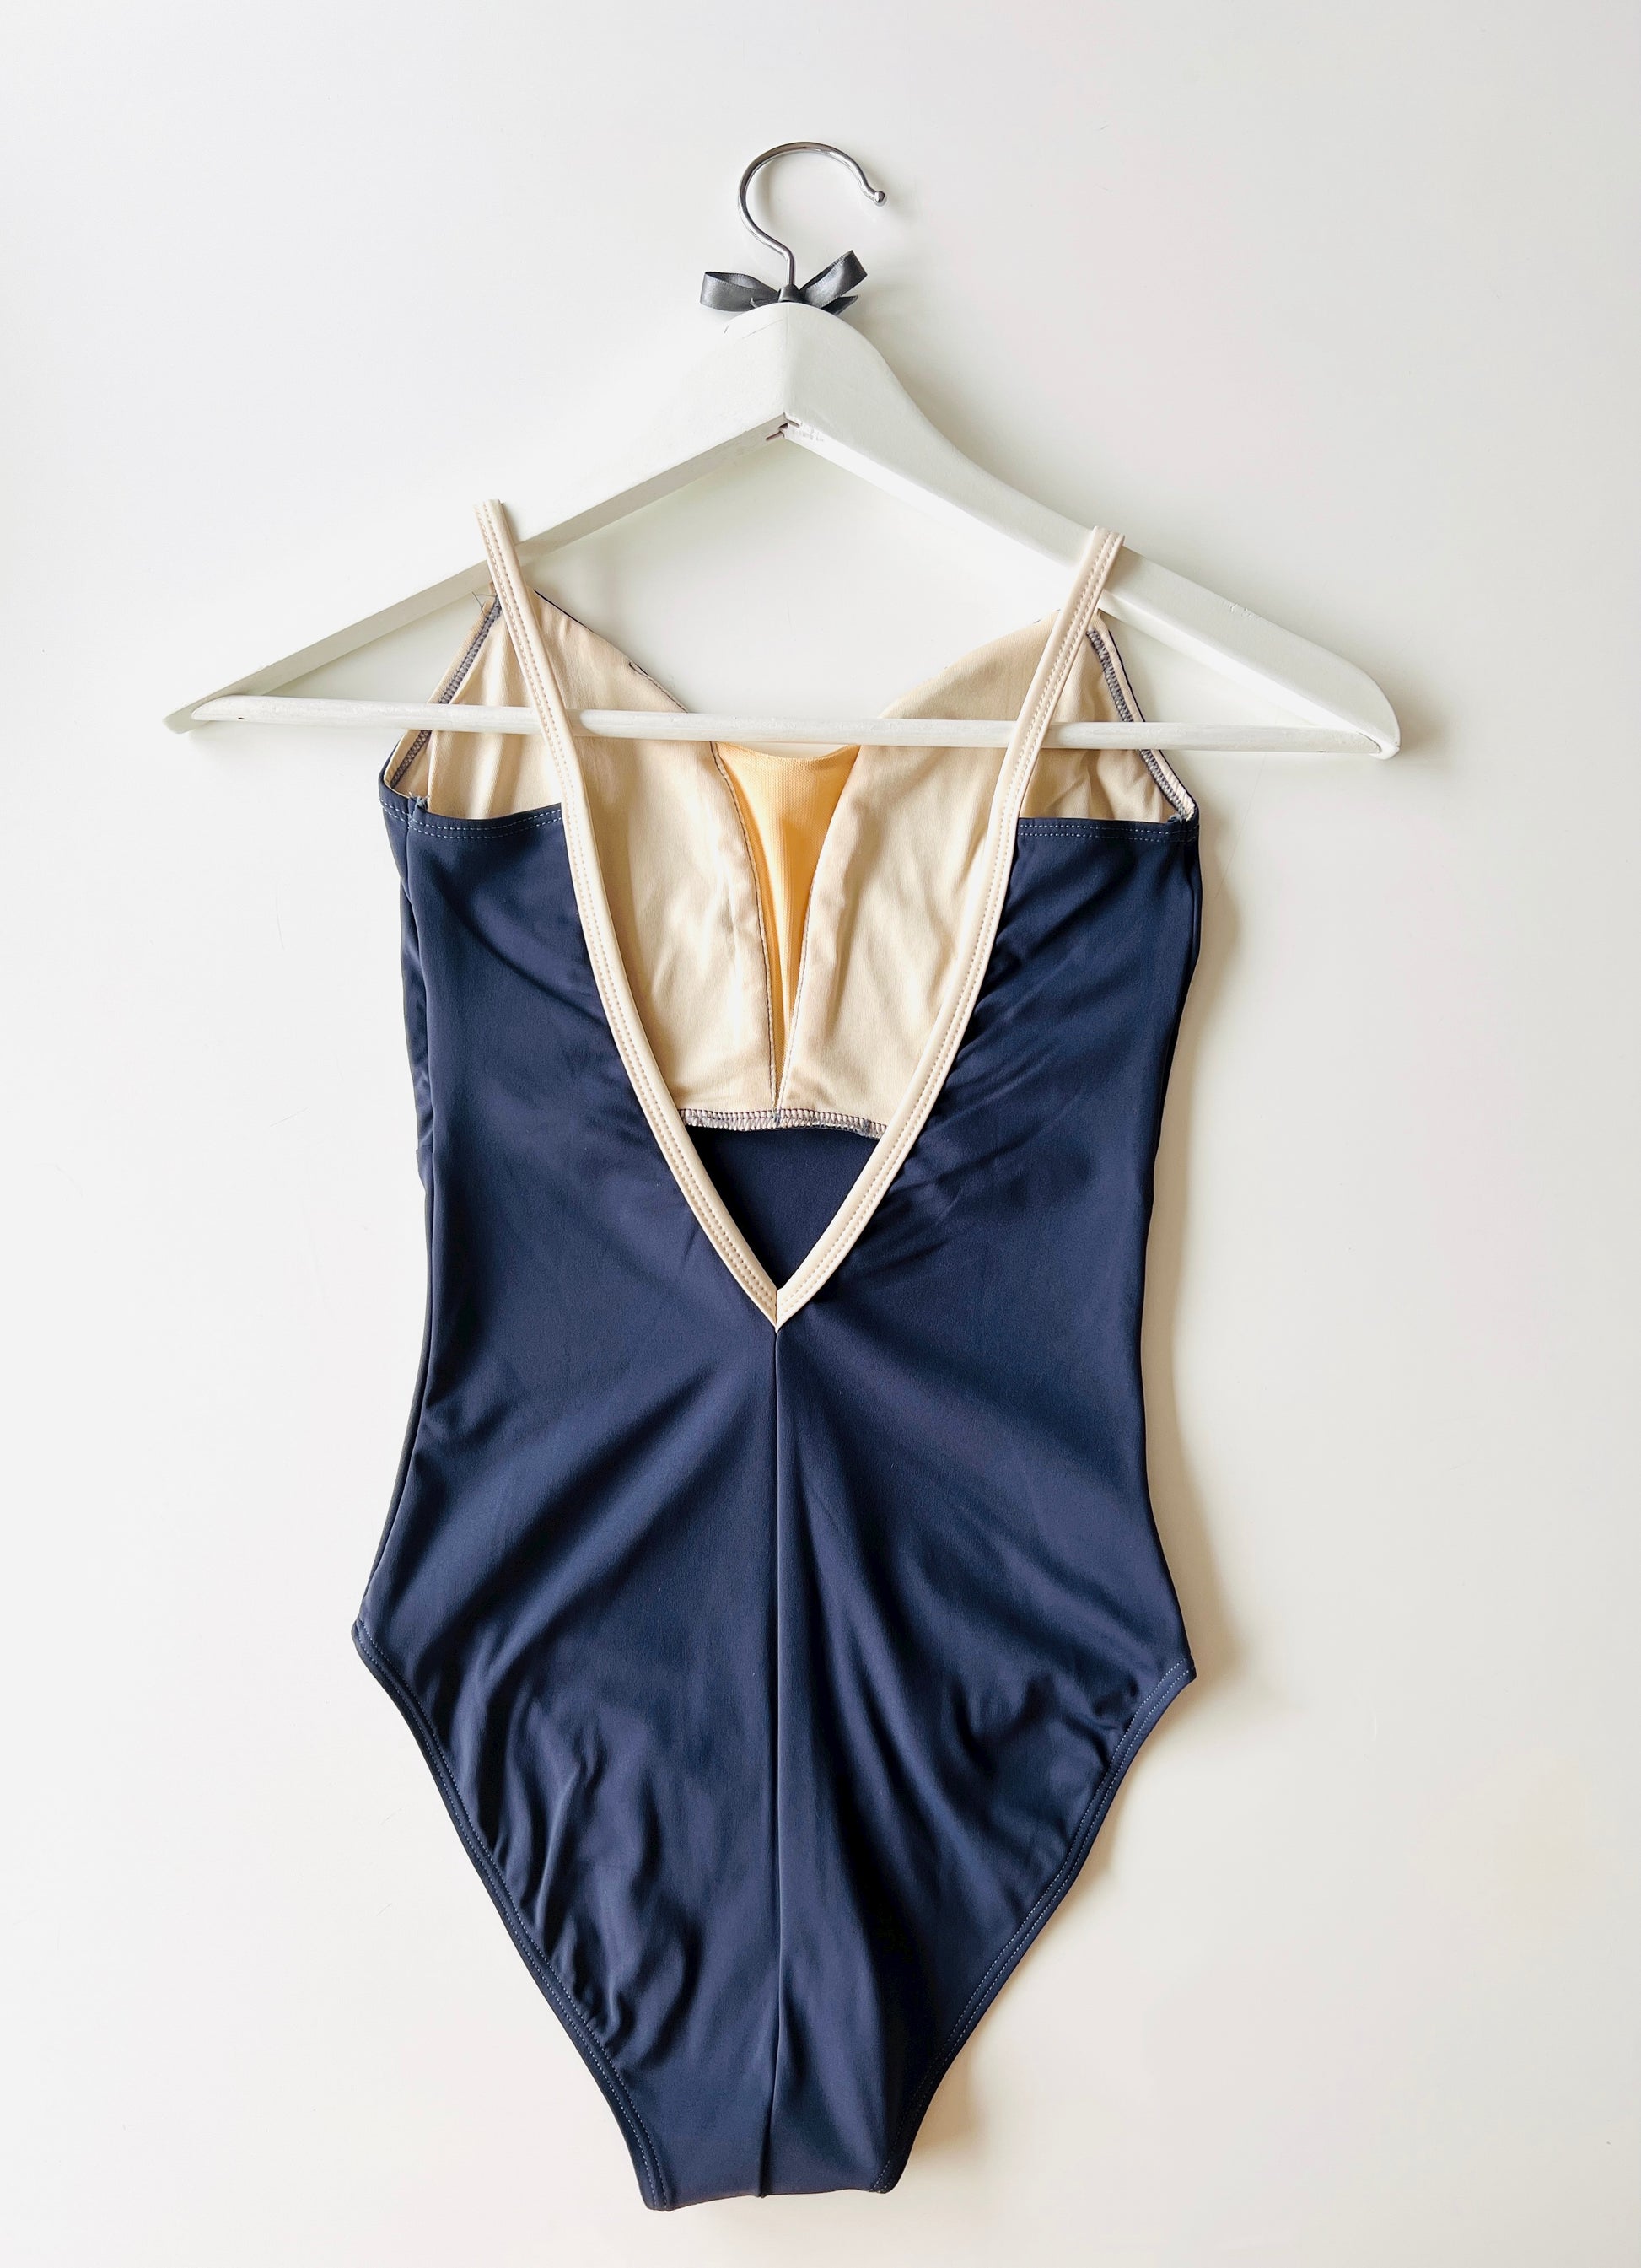 v mesh ballet camisole leotard indigo navy blue from The Collective Dancewear